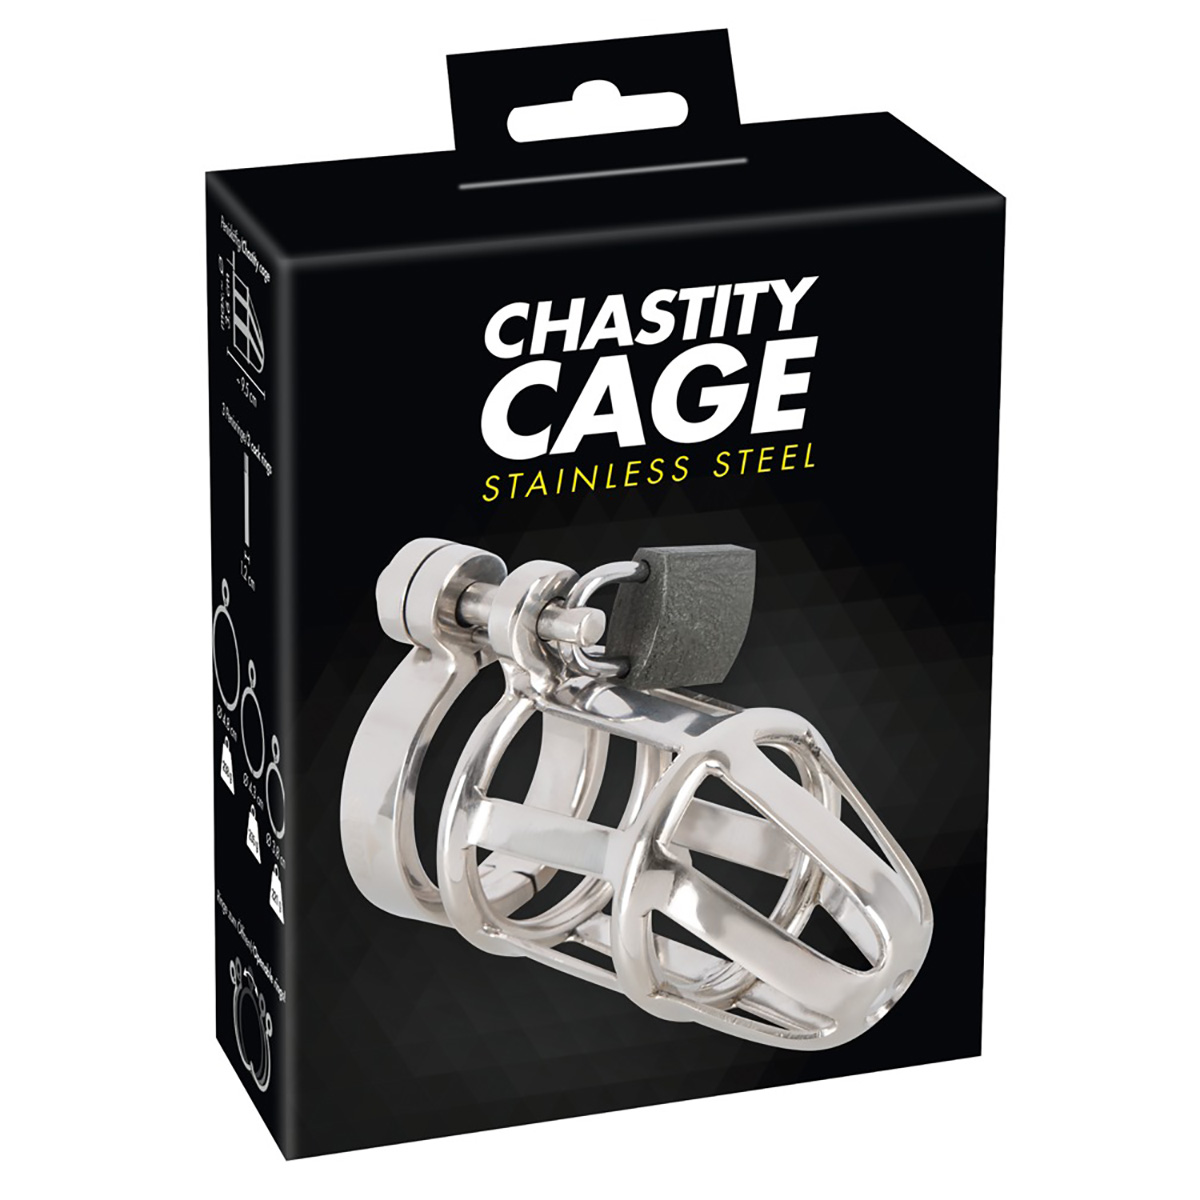 Chastity Cage - Мужской пояс верности, 9,5 см (серебристый)